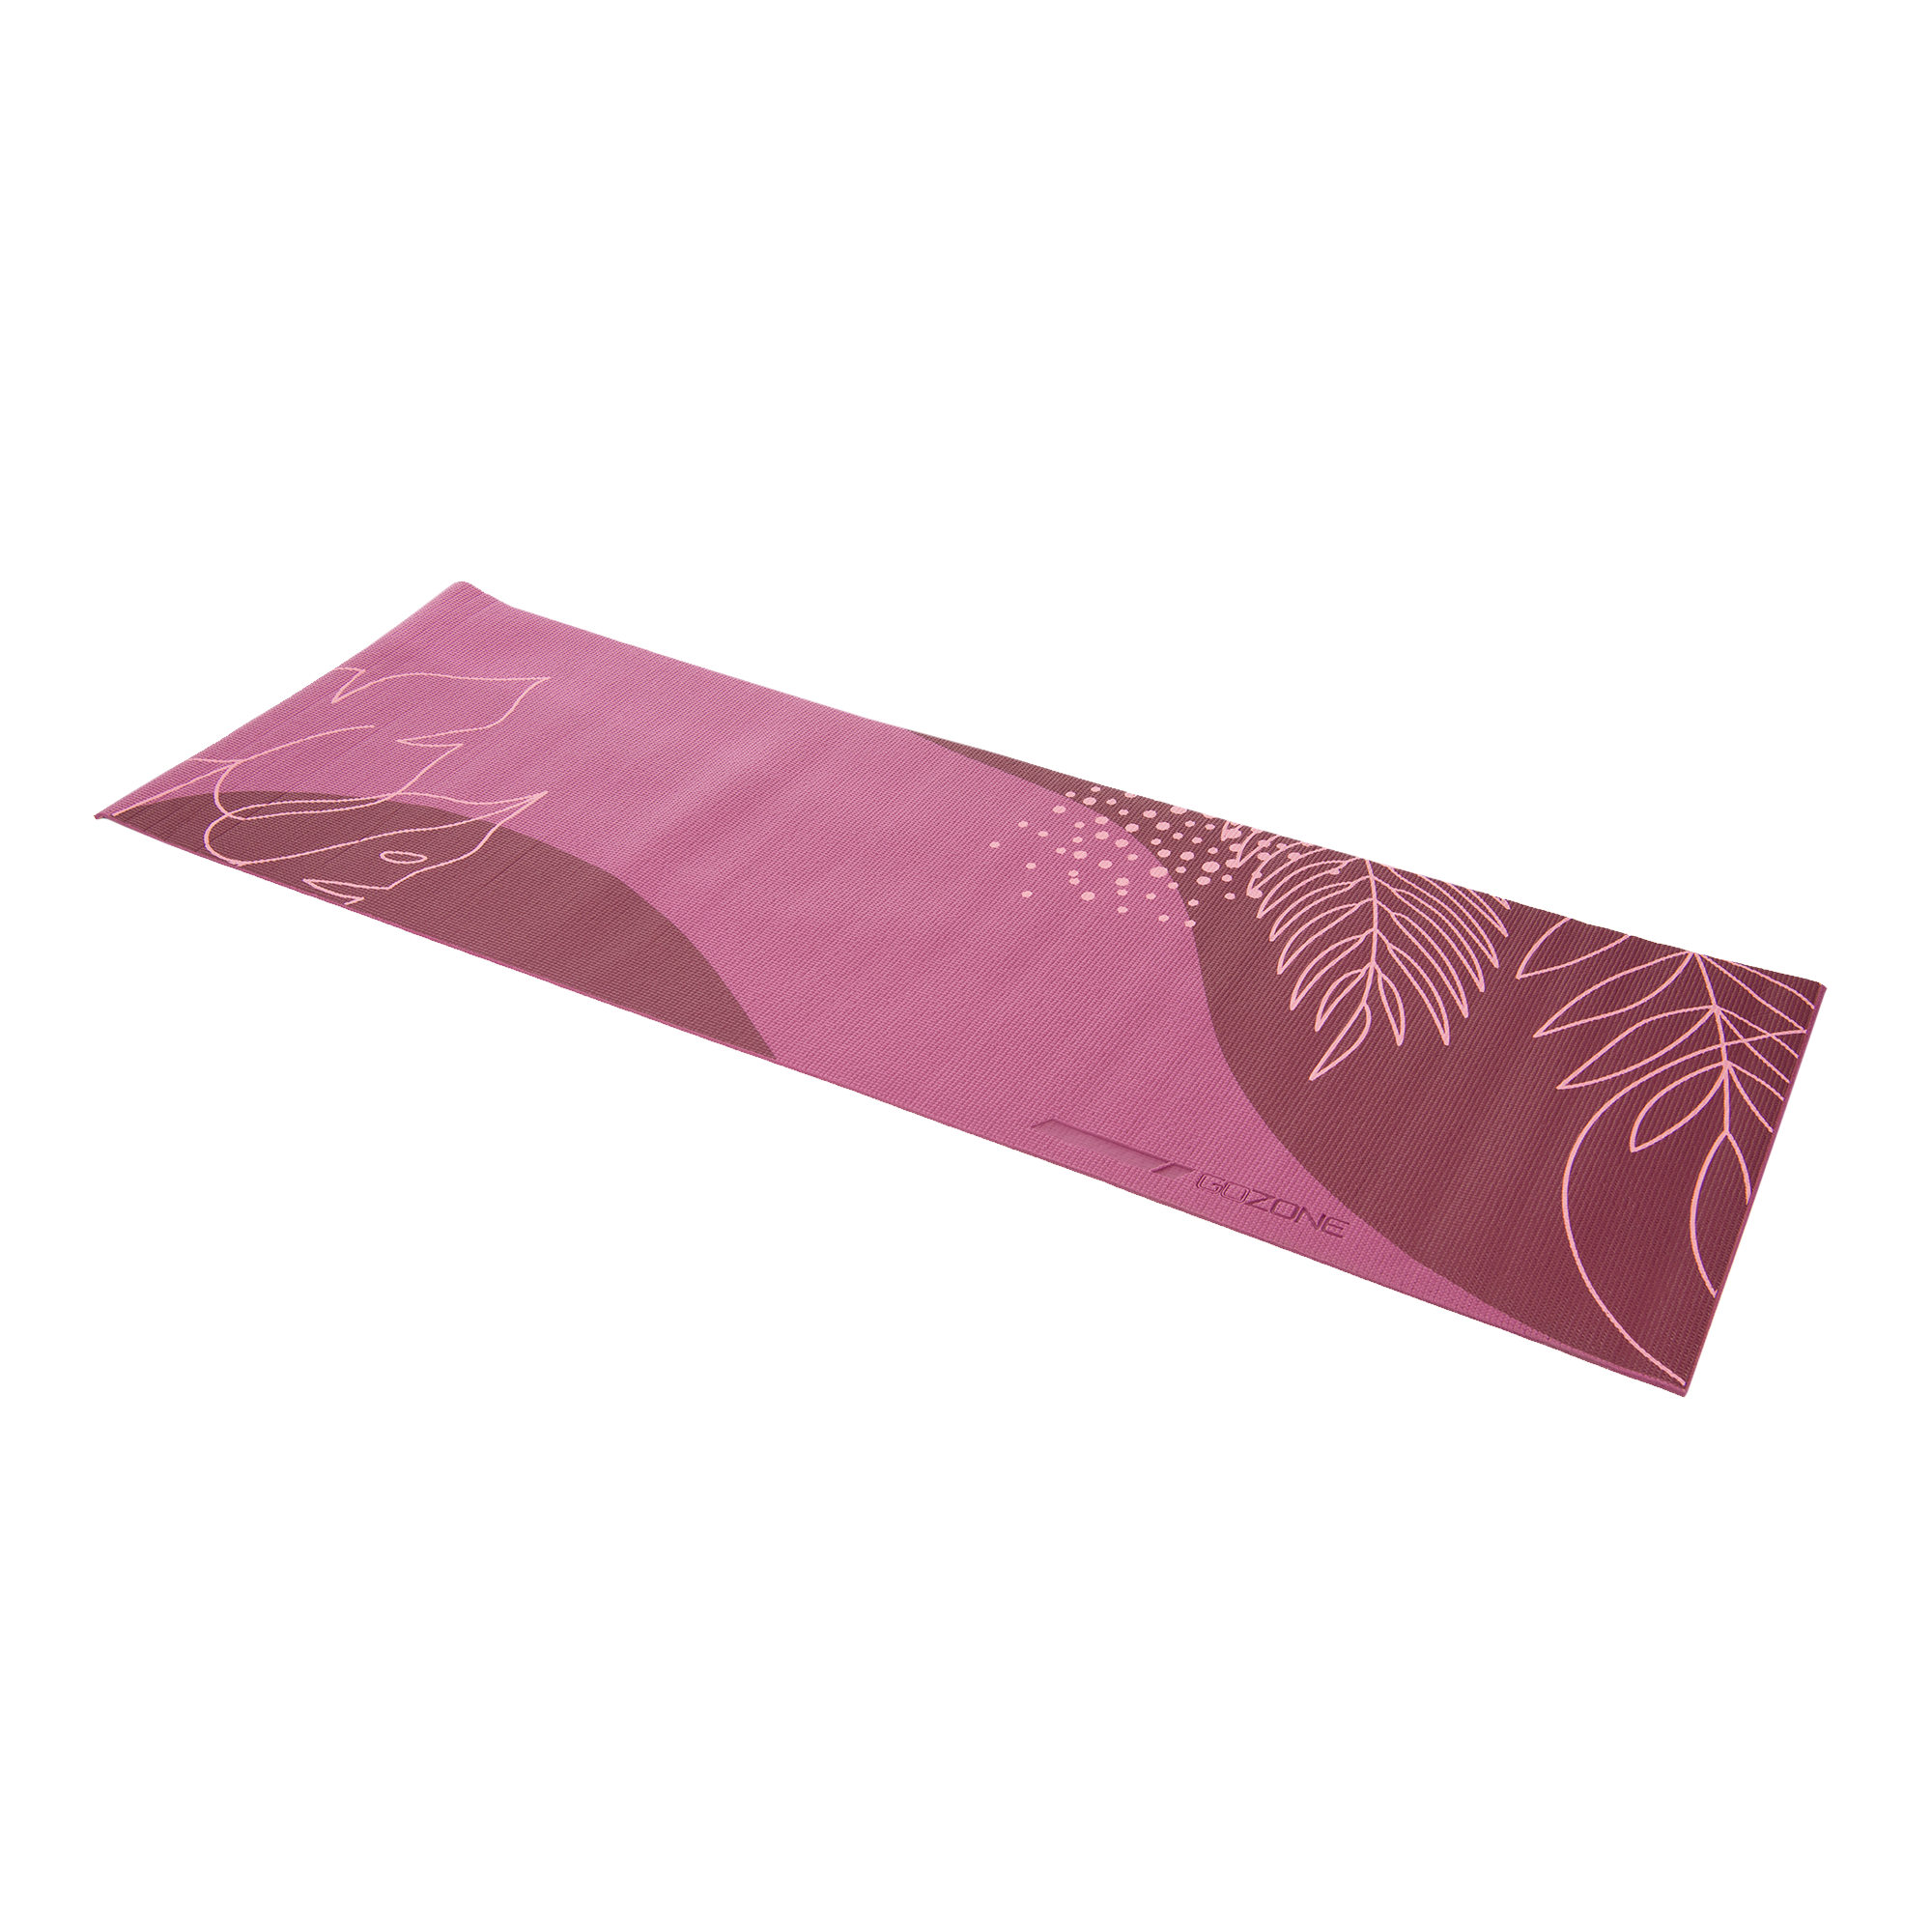 6mm PVC Foliage Printed Yoga Mat – 24 x 68 – Berry/Purple